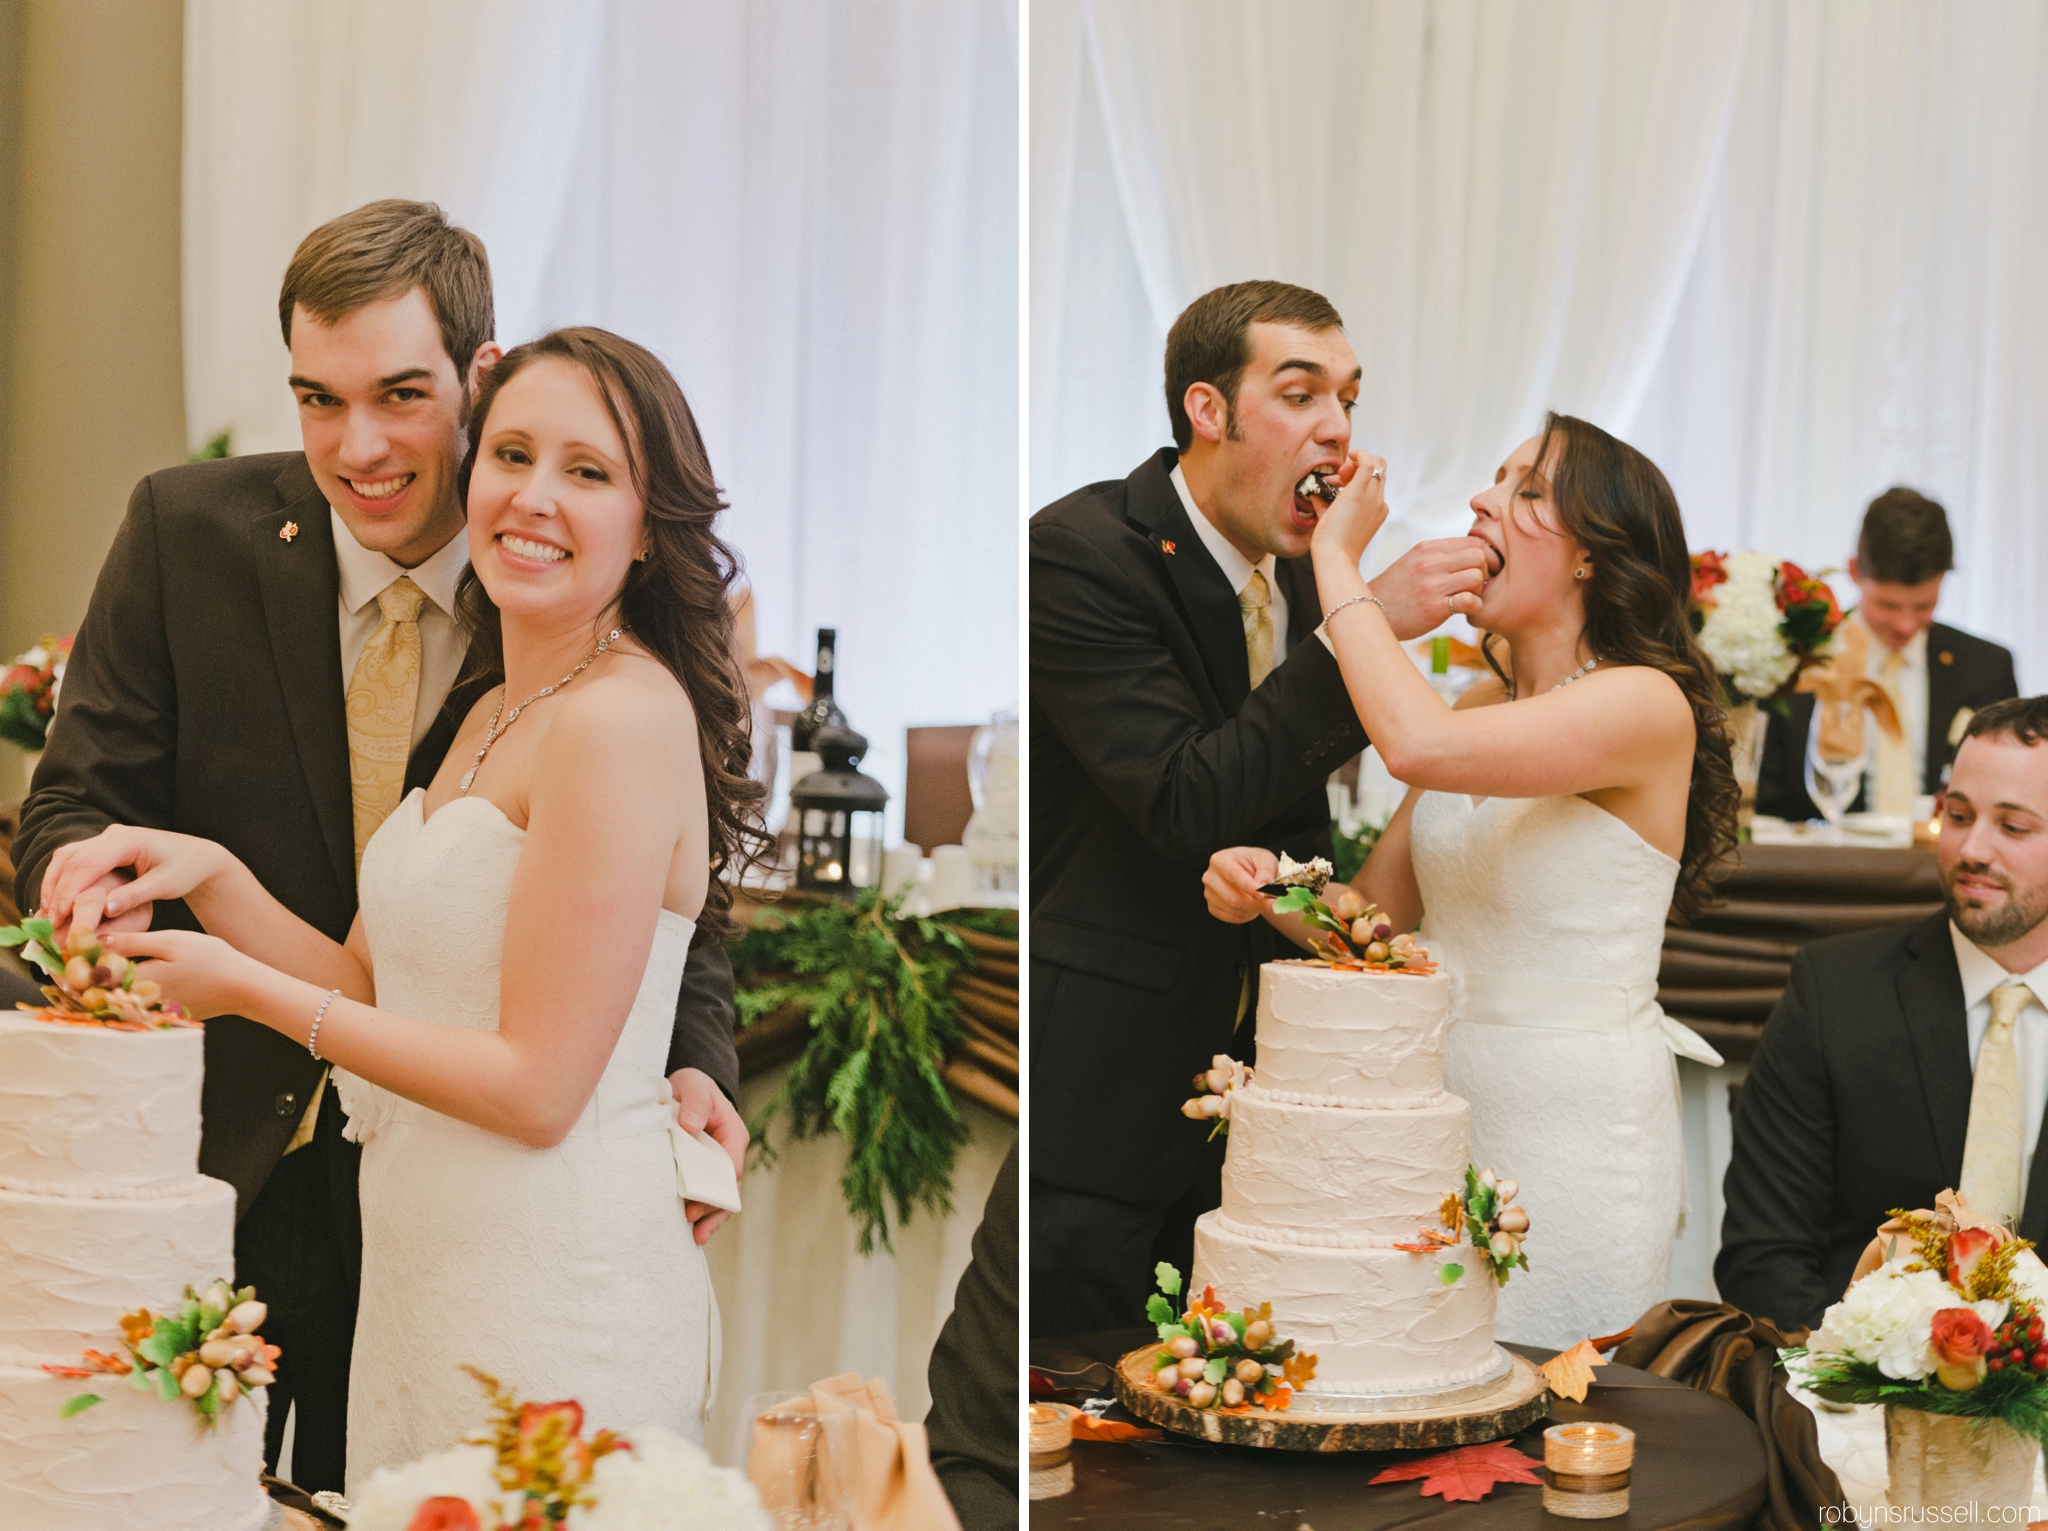 56-bride-and-groom-cut-and-eat-wedding-cake.jpg